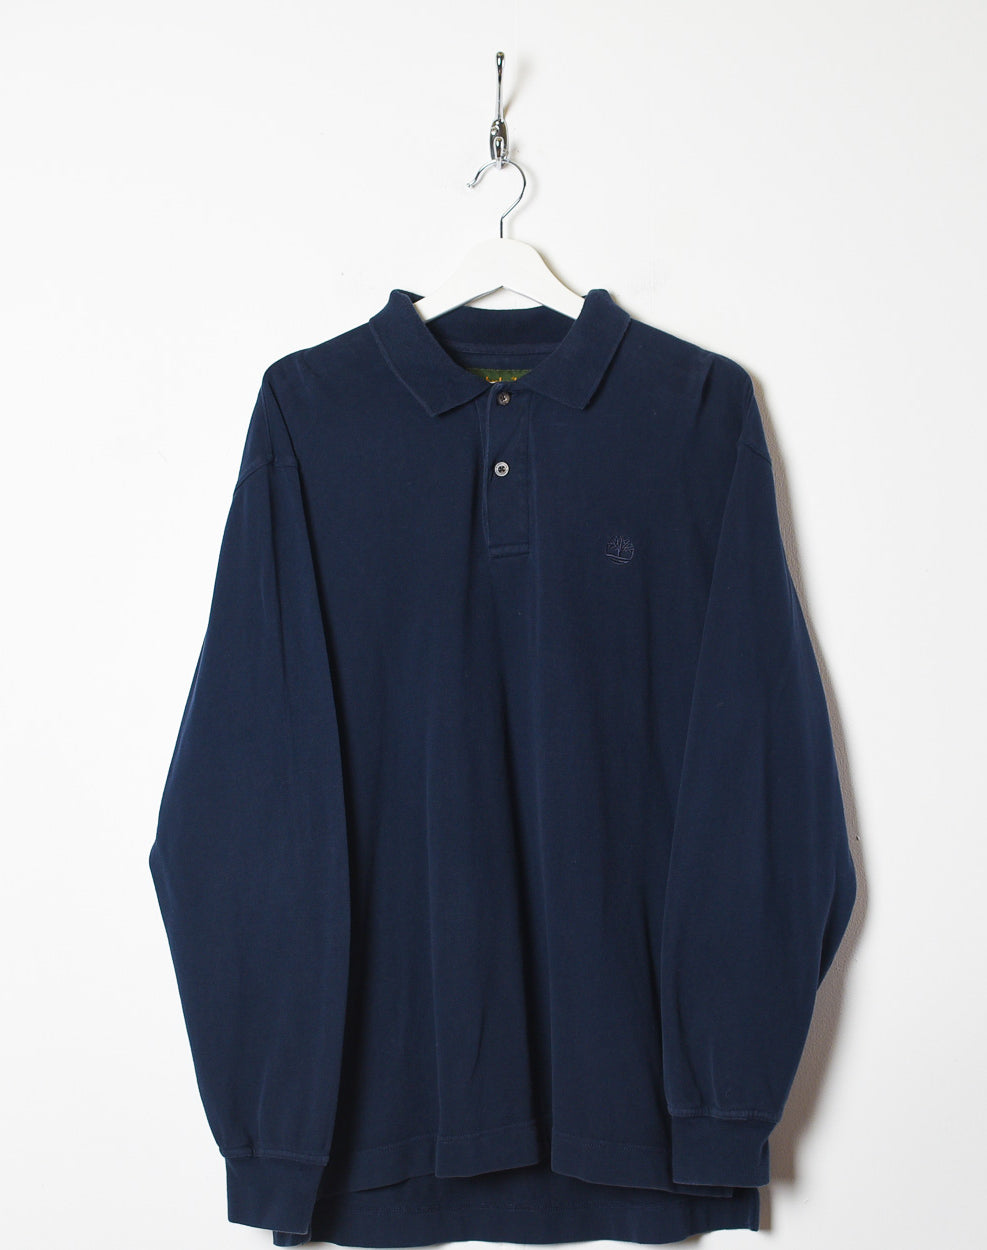 Navy Timberland Long Sleeved Polo Shirt - Medium